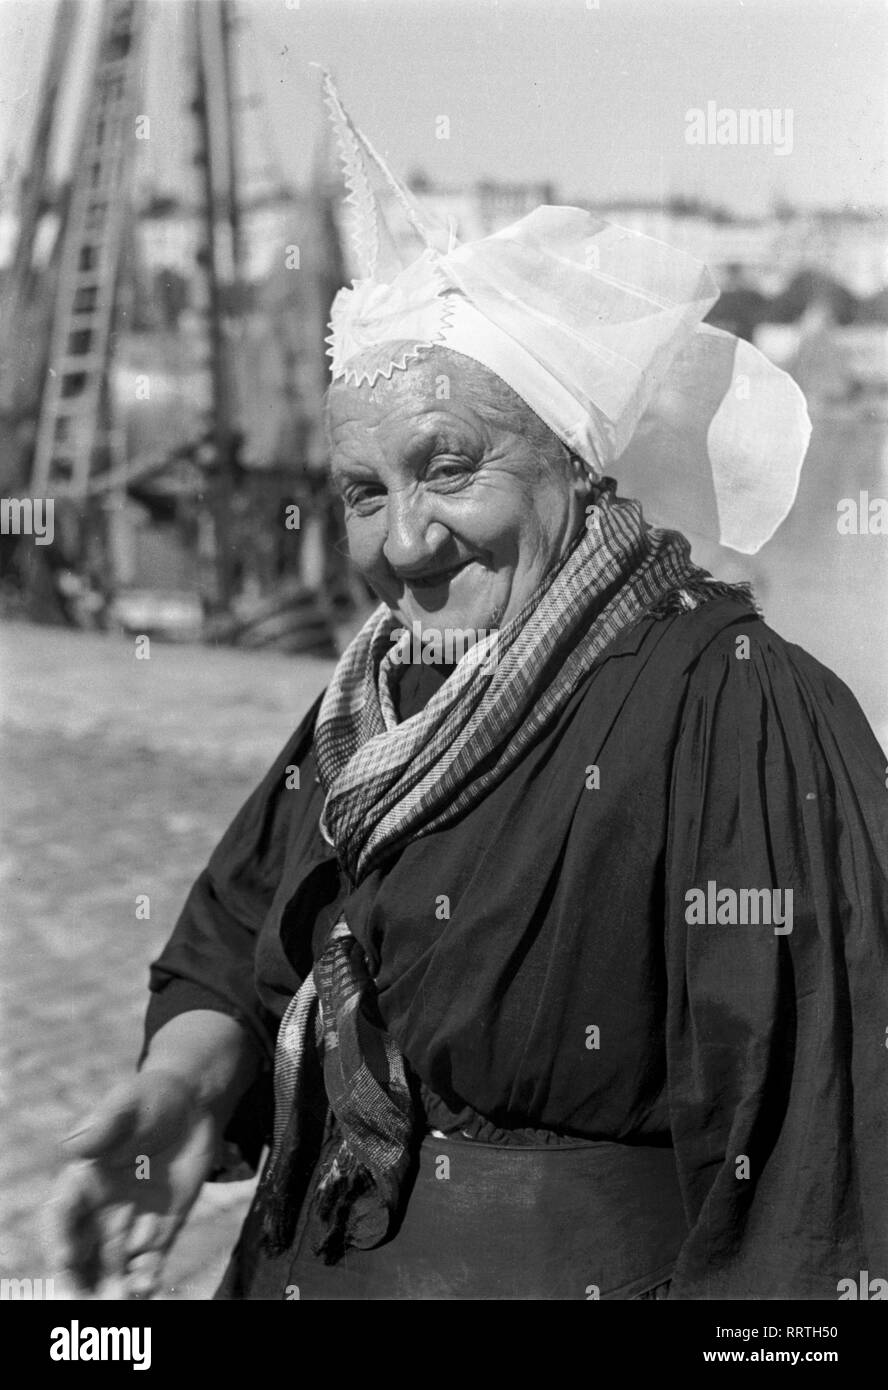 La Rochelle - La Rochelle XV.31-29-36, France, Brittany - portrait of an old Breton woman. Image date circa 1950. Photo Erich Andres Stock Photo